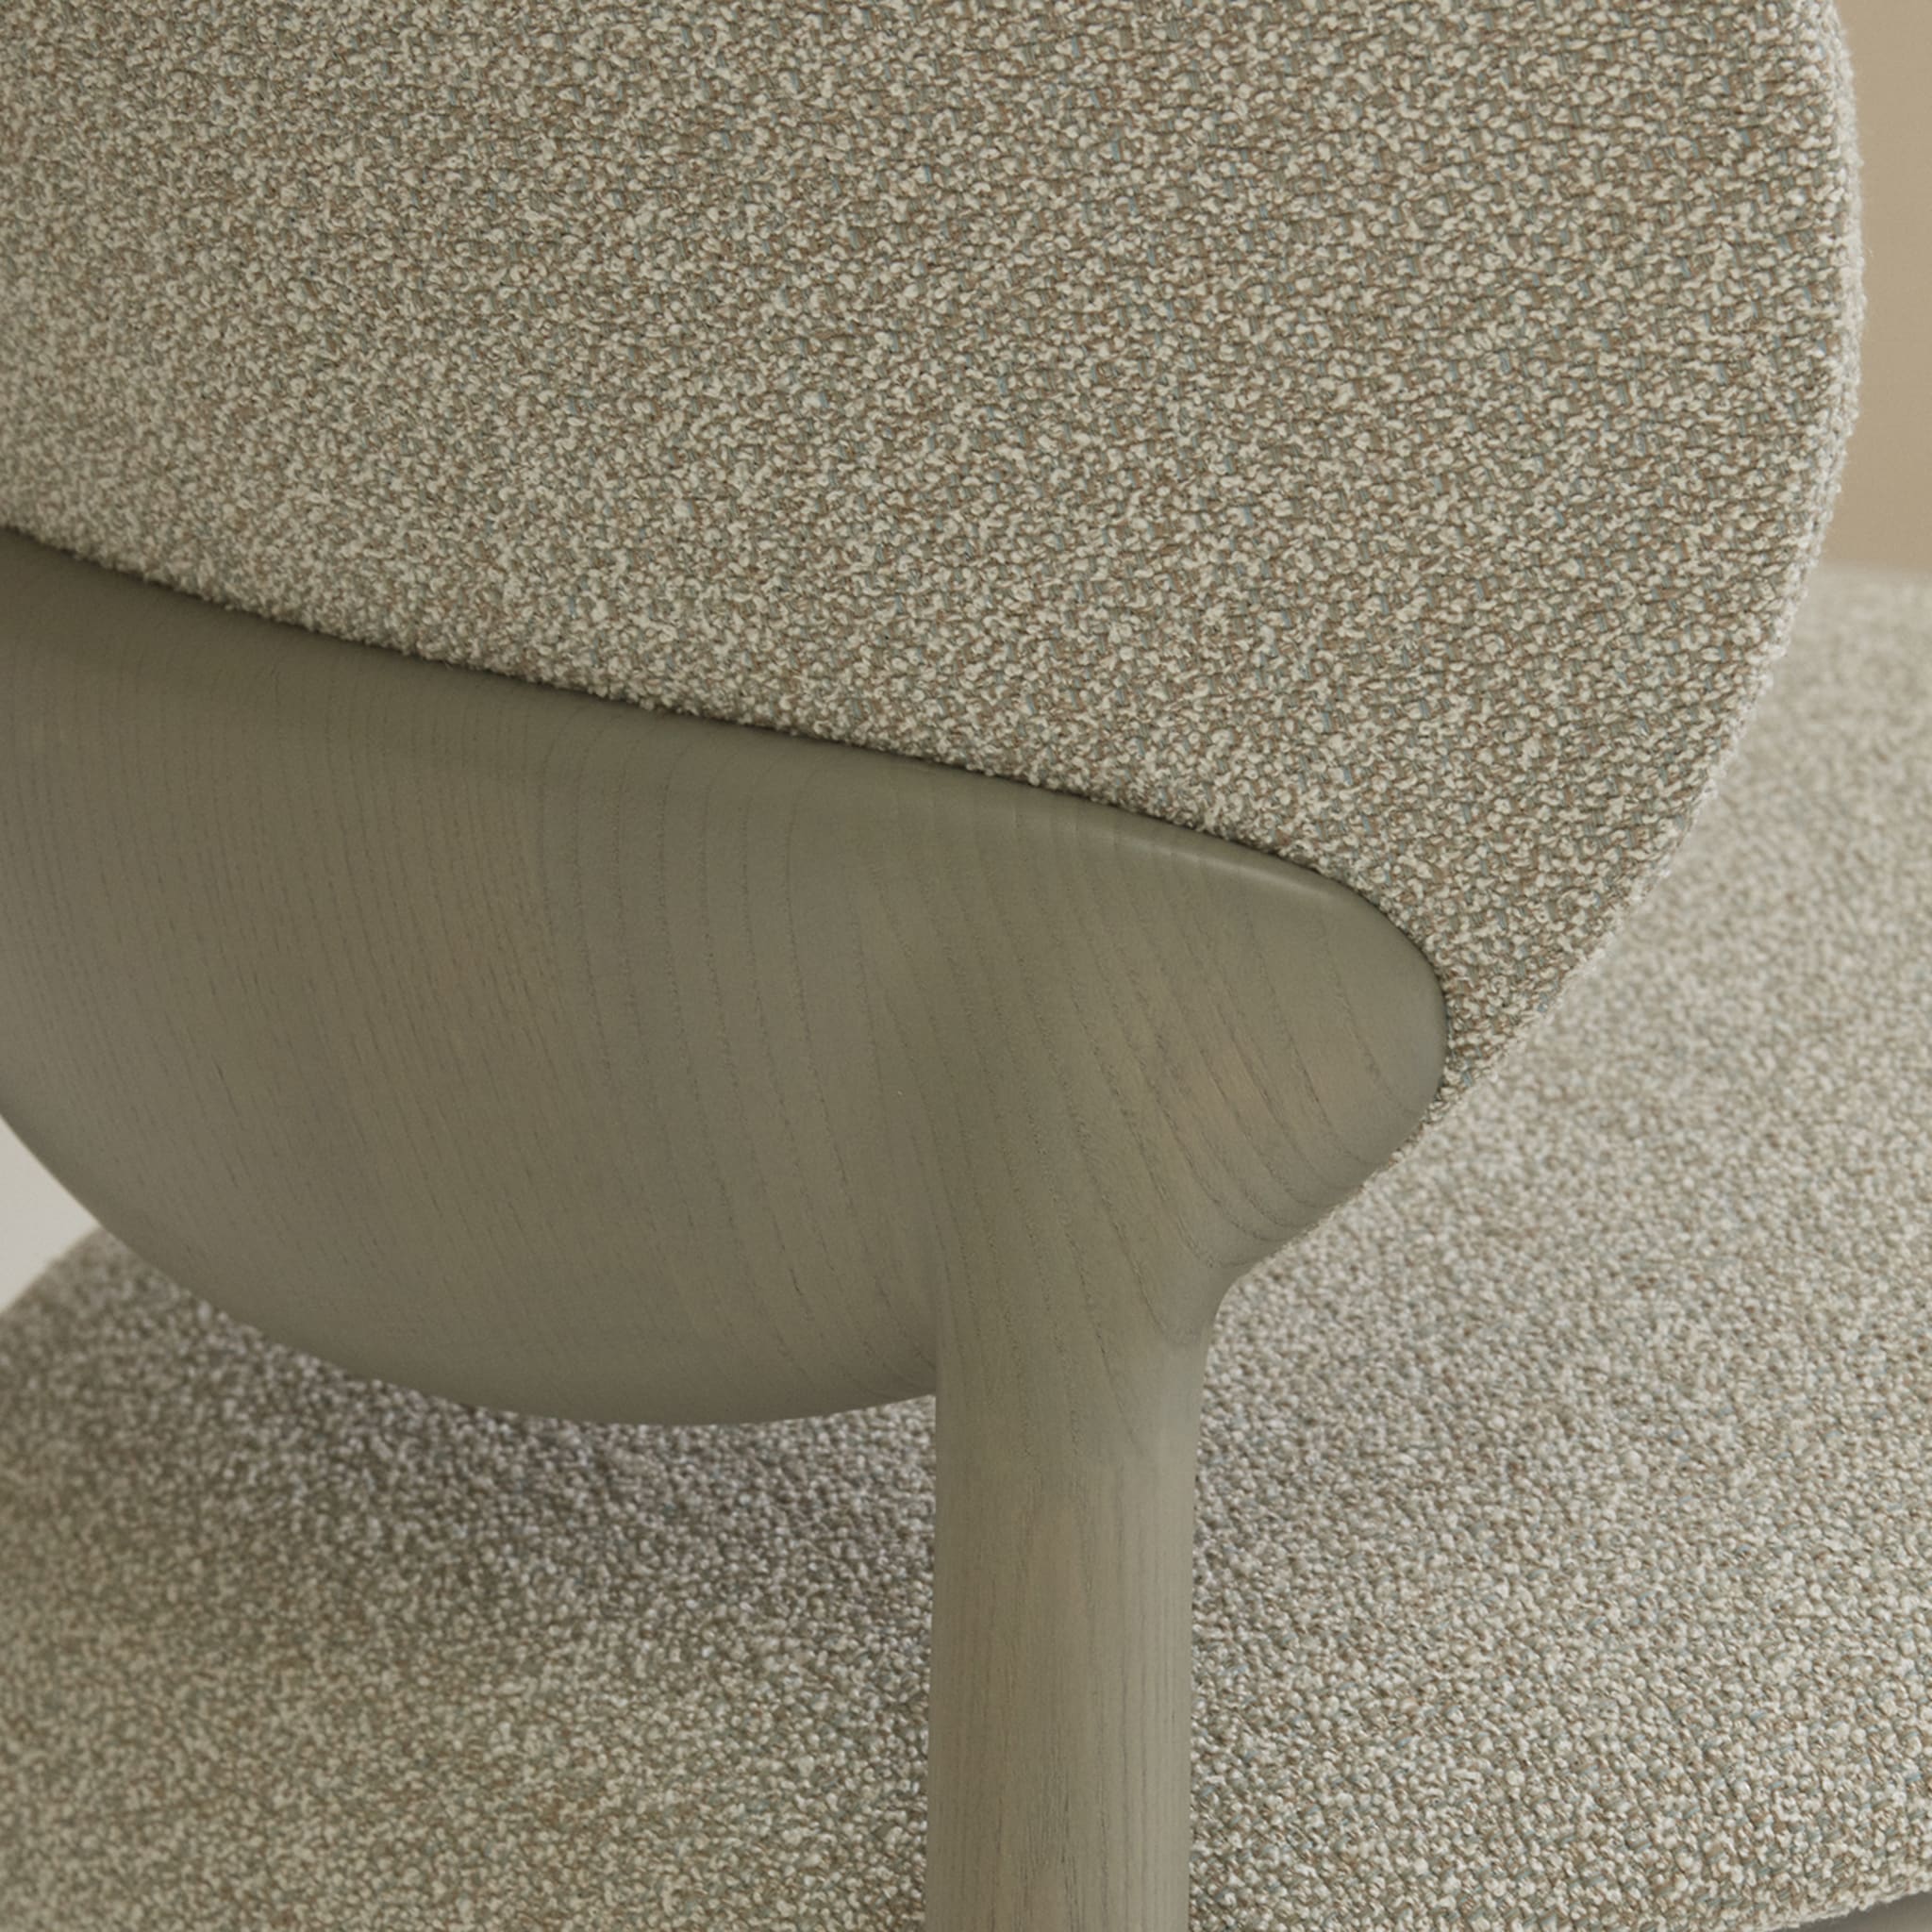 Fleuron 203 Gray Ash Lounge Chair by Constance Guisset - Alternative view 1